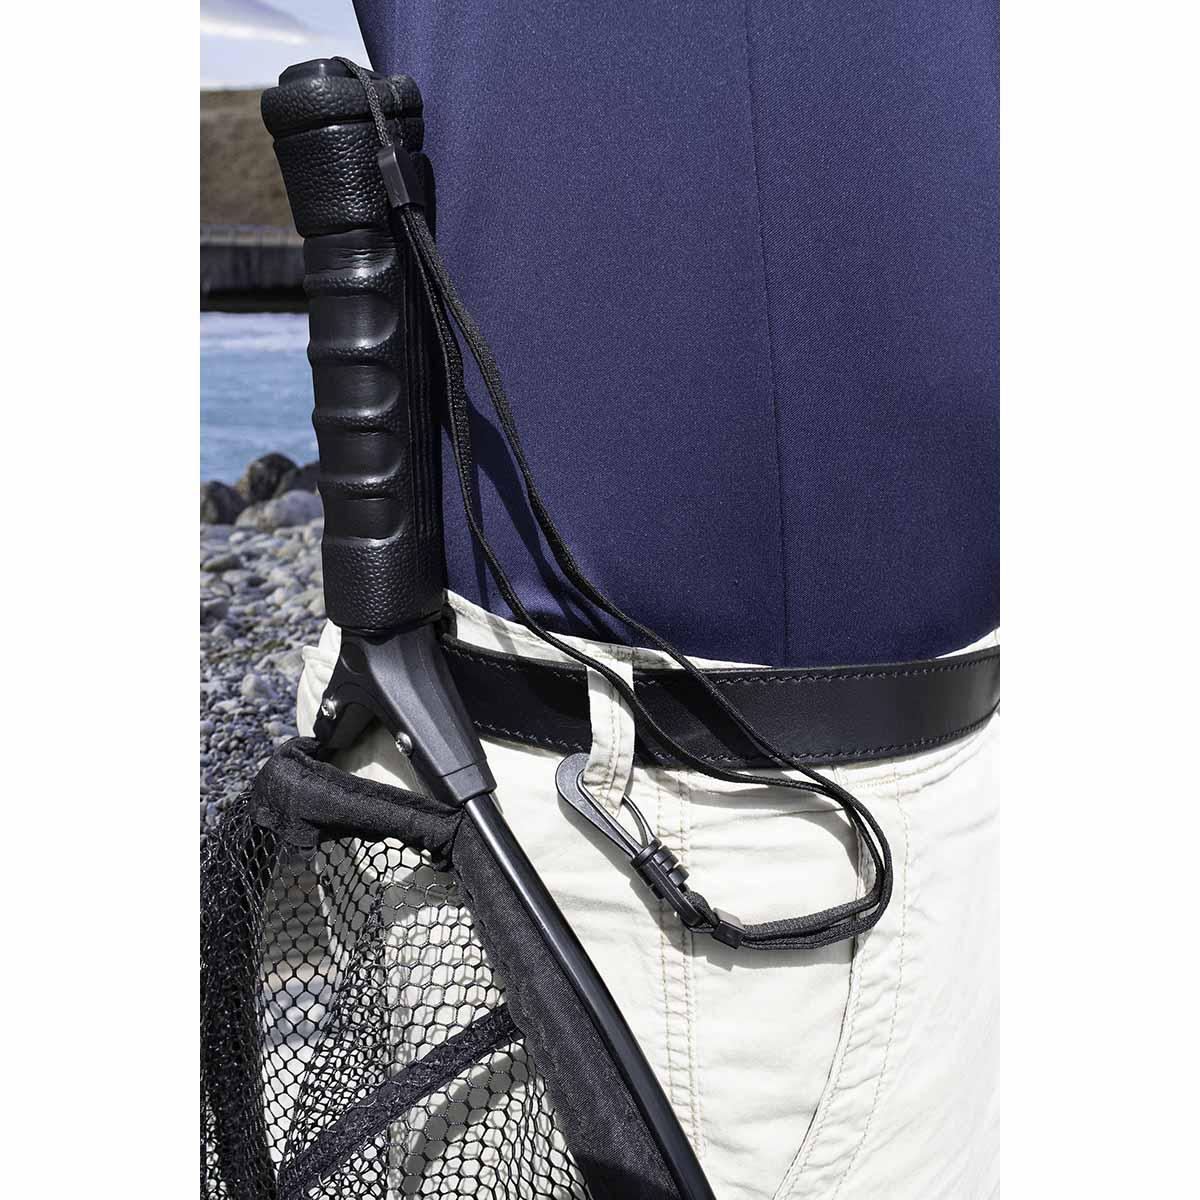 Black Magic Short Handle Net with Belt/Bungee Clip-Nets-Black Magic-Fishing Station